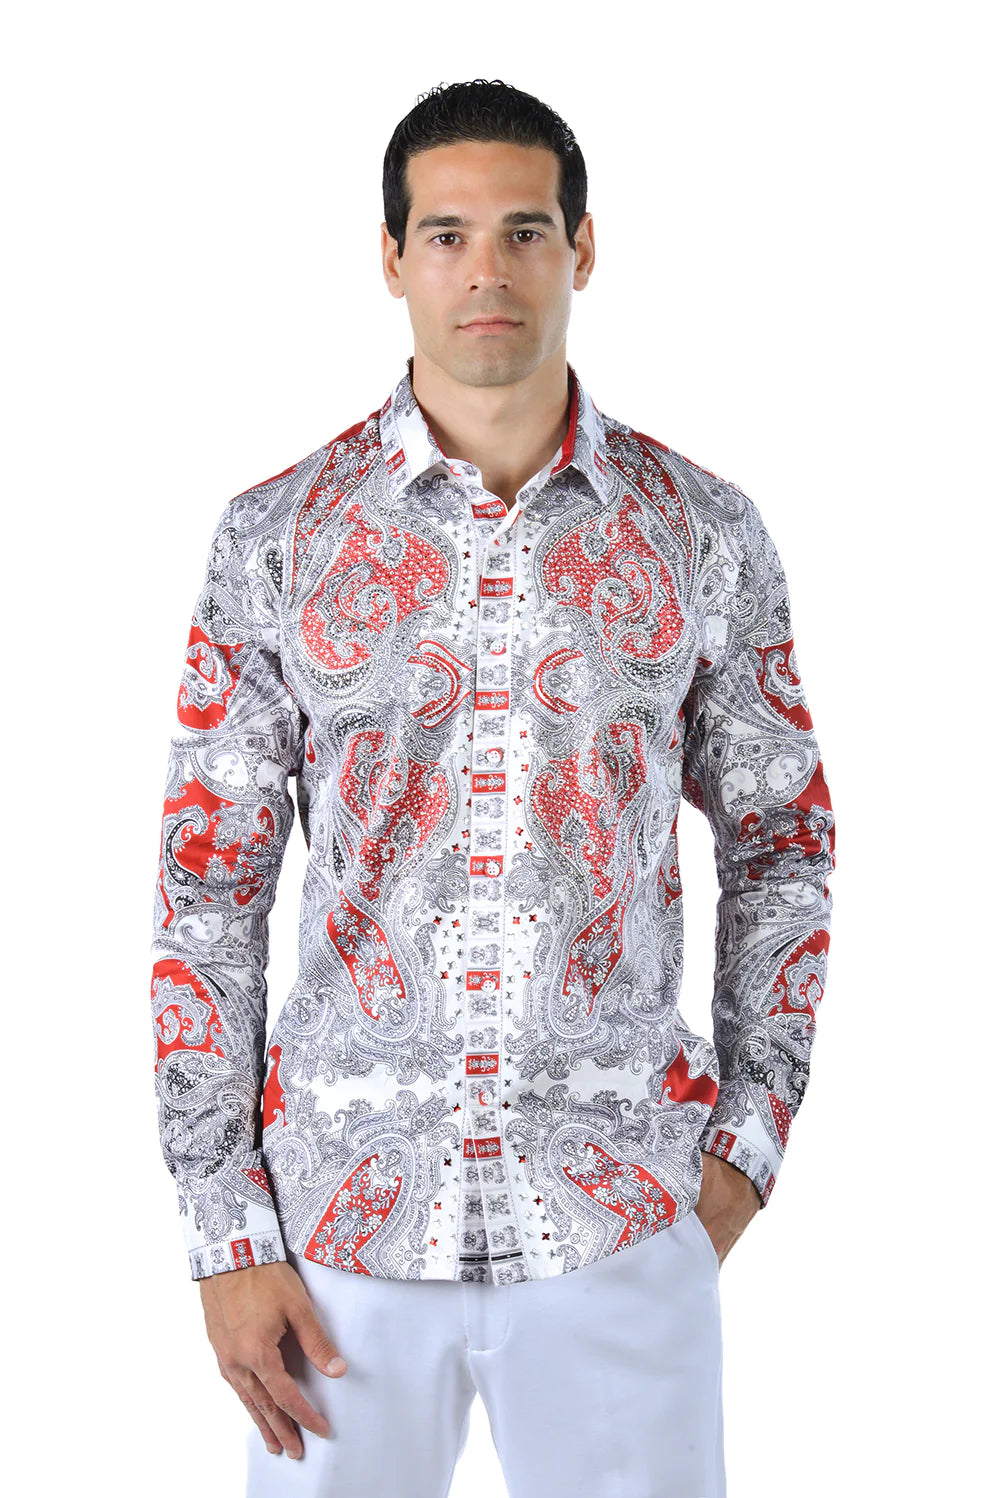 Barabas Men's Button-Up Rhinestone Paisley Shirt